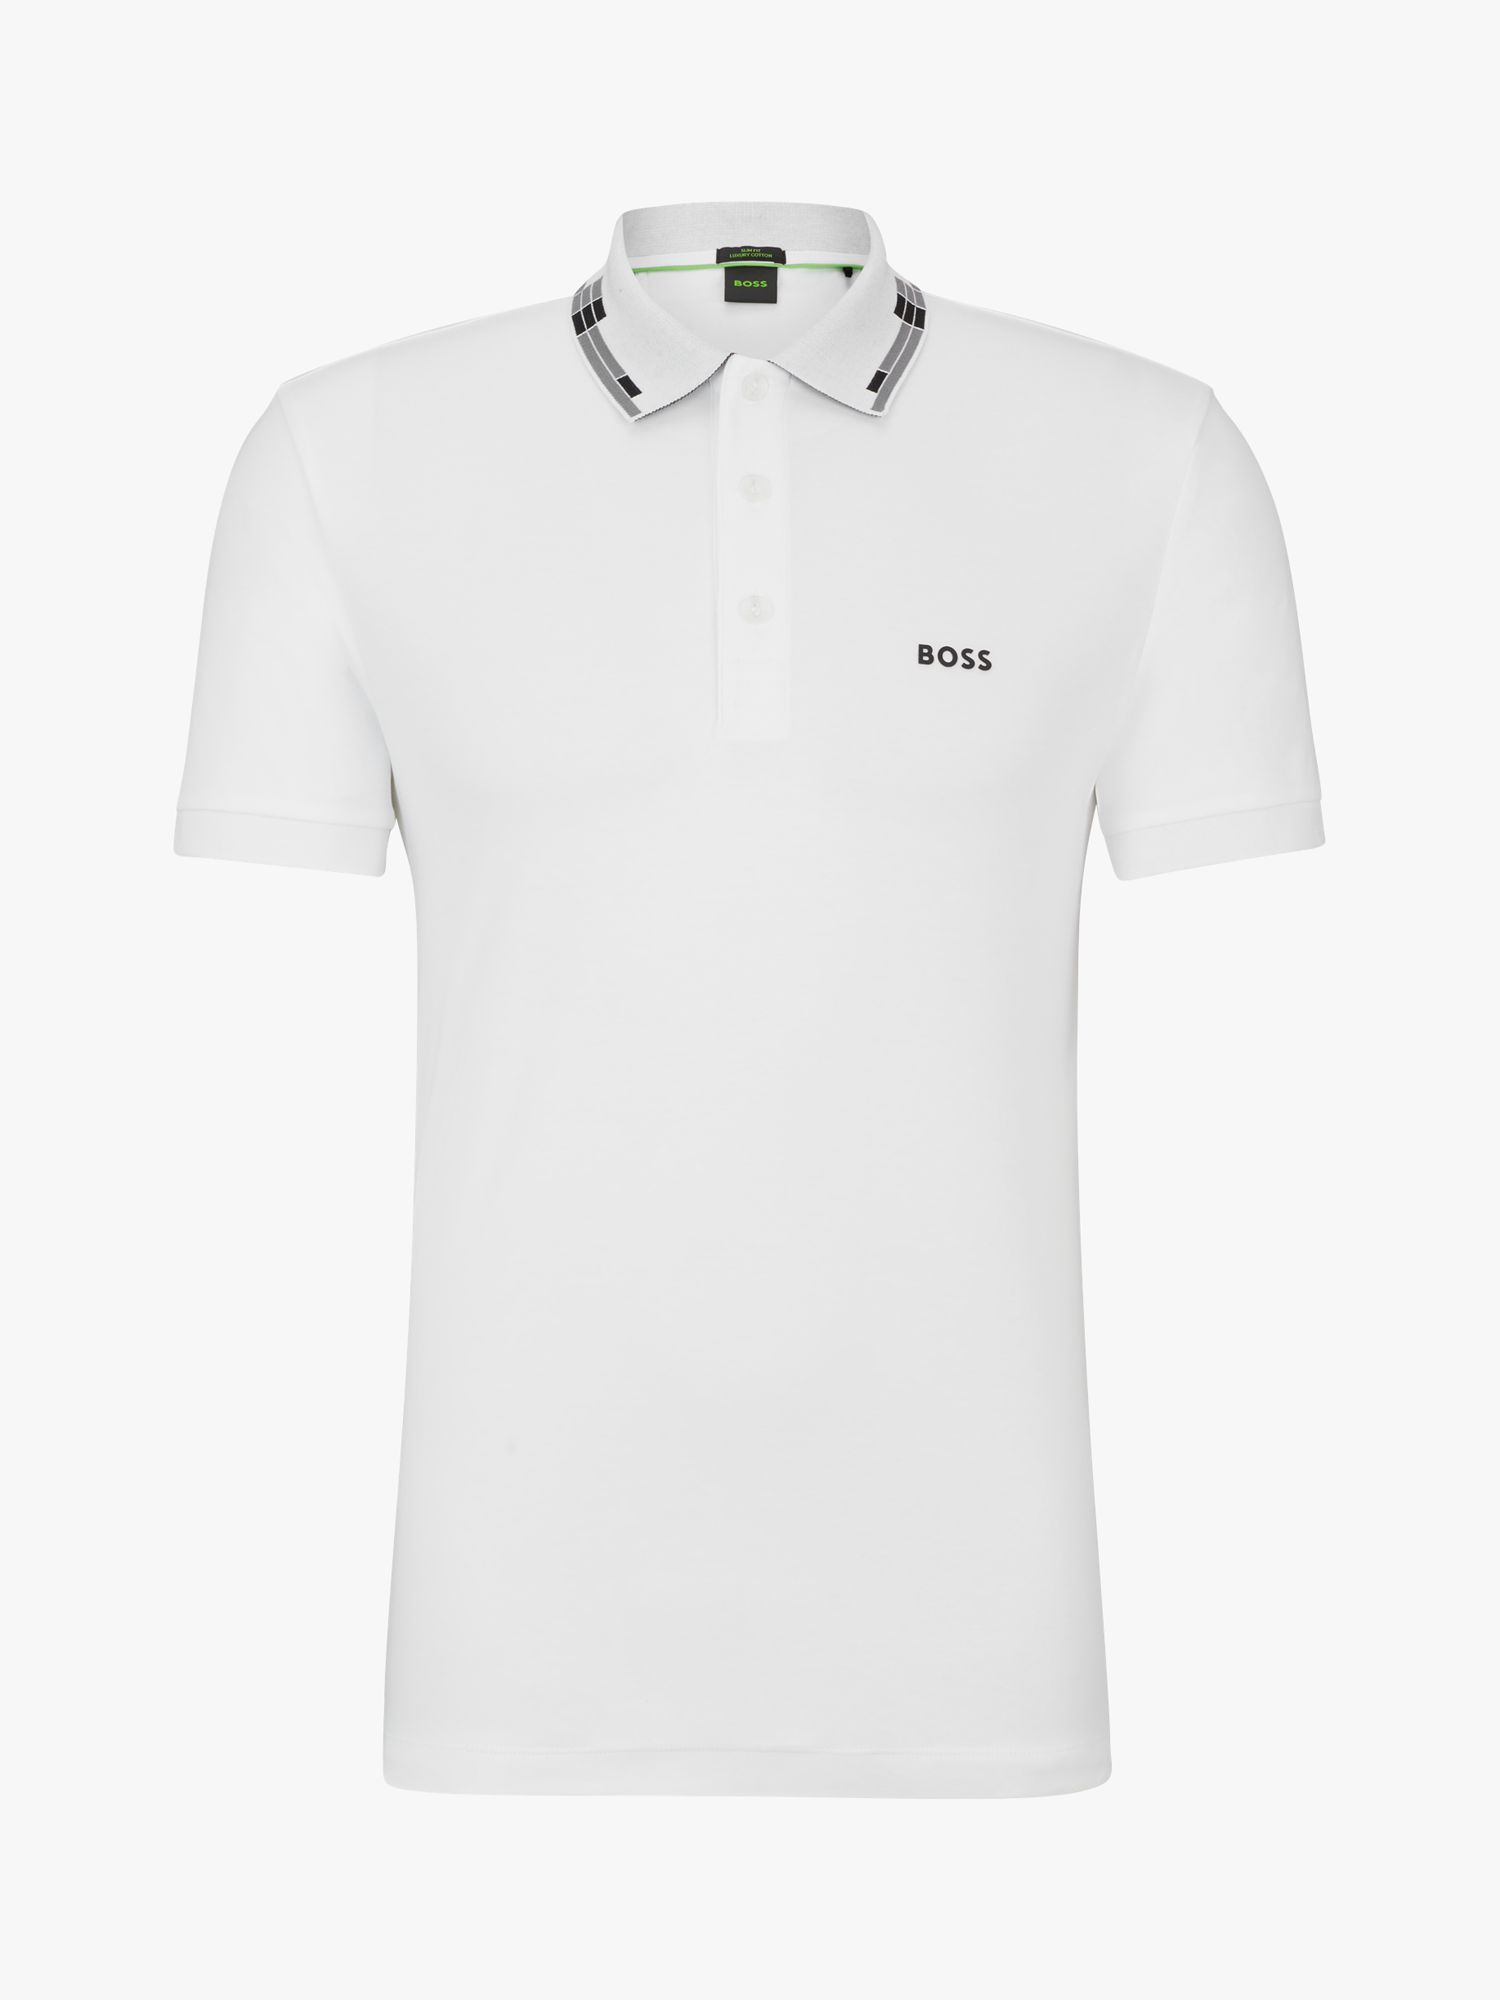 BOSS Paule 100 Polo Shirt, White at John Lewis & Partners